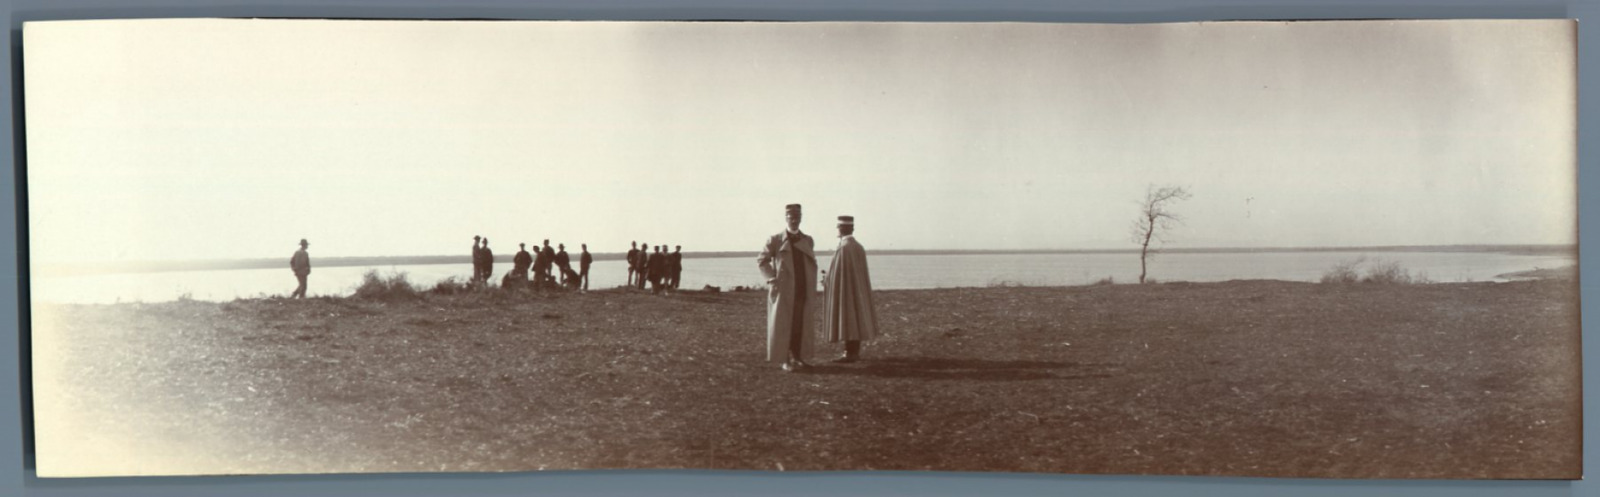 Panorama Kodak, Sicily, Visit of the Emperor and Empress d#03